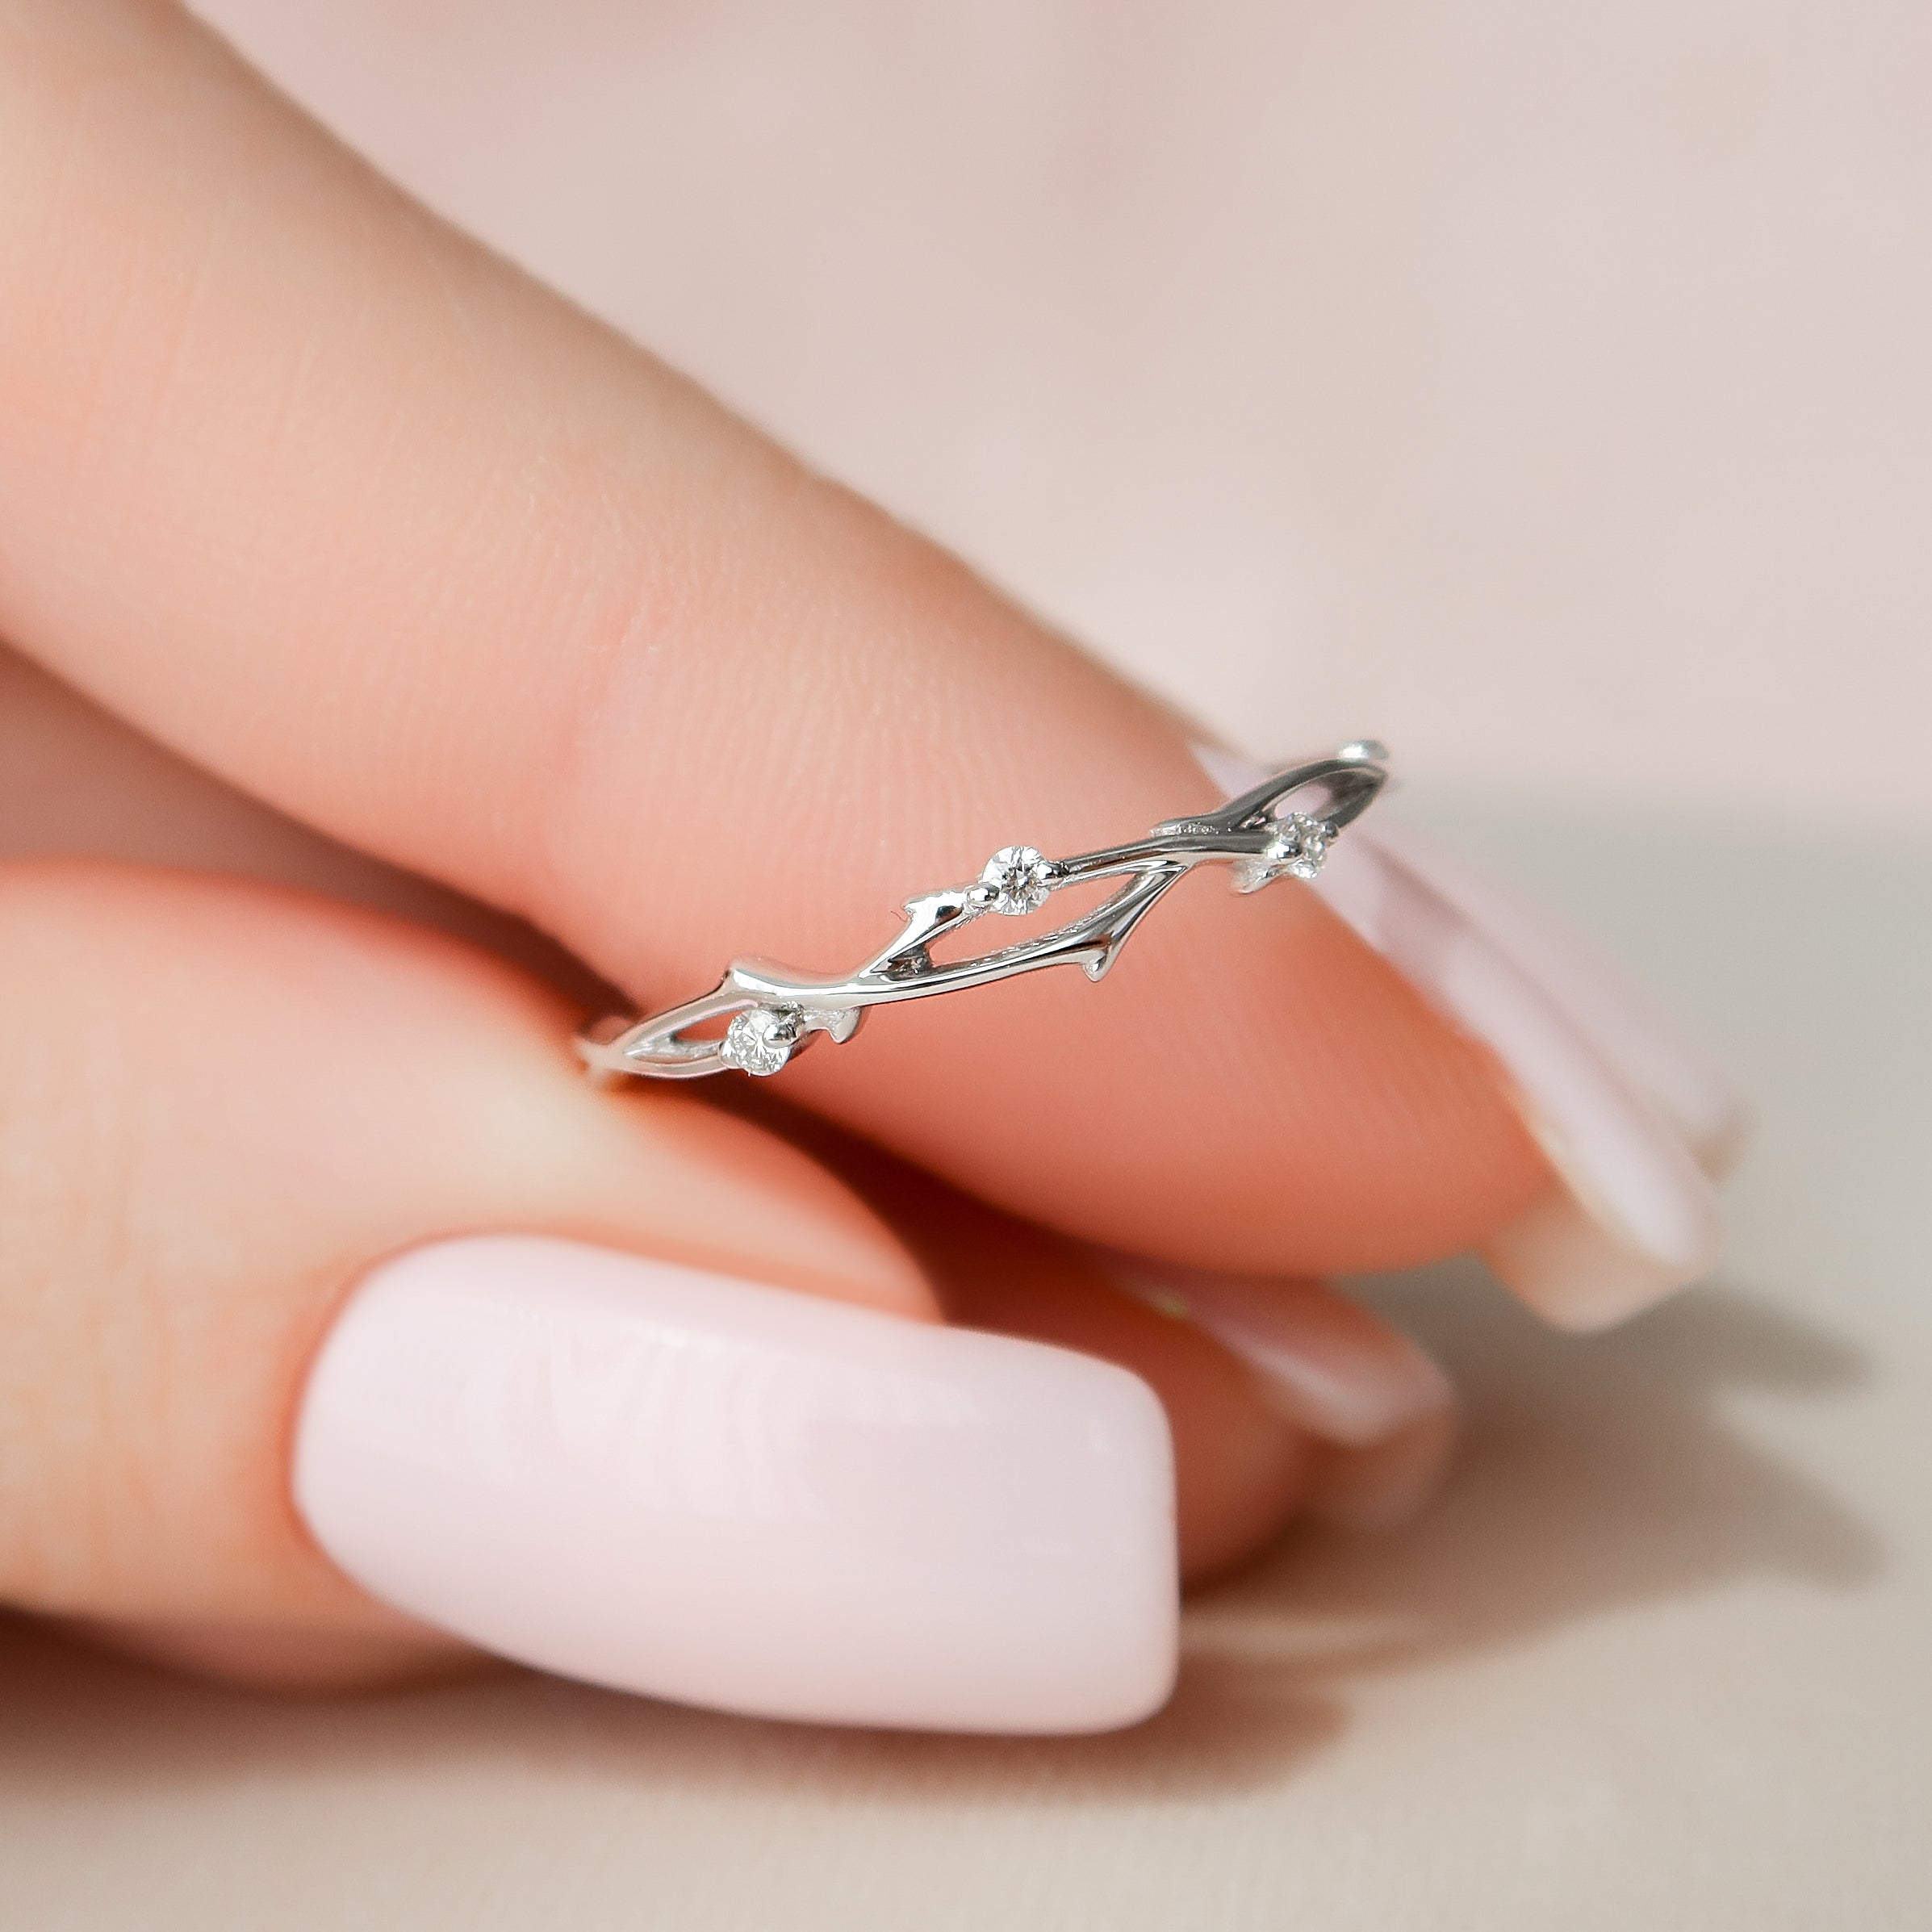 sassu fine Mens Womens Endless love Silver rings Adjustable Ring Swarovski  Cubic Zirconia Wedding Ring Promise Ring Couples Ring|Amazon.com